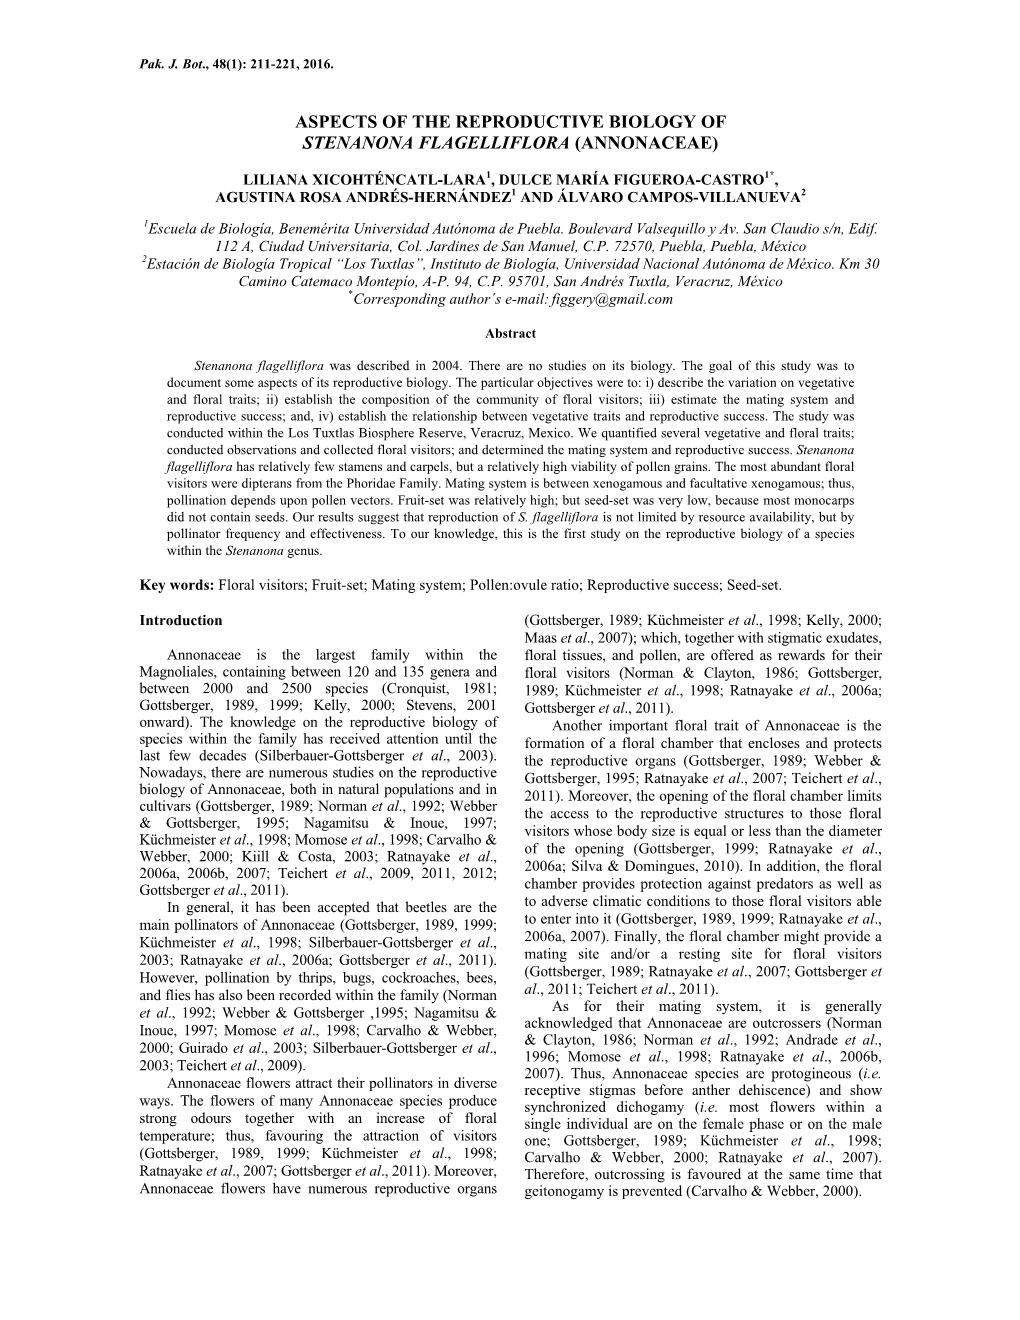 Aspects of the Reproductive Biology of Stenanona Flagelliflora (Annonaceae)